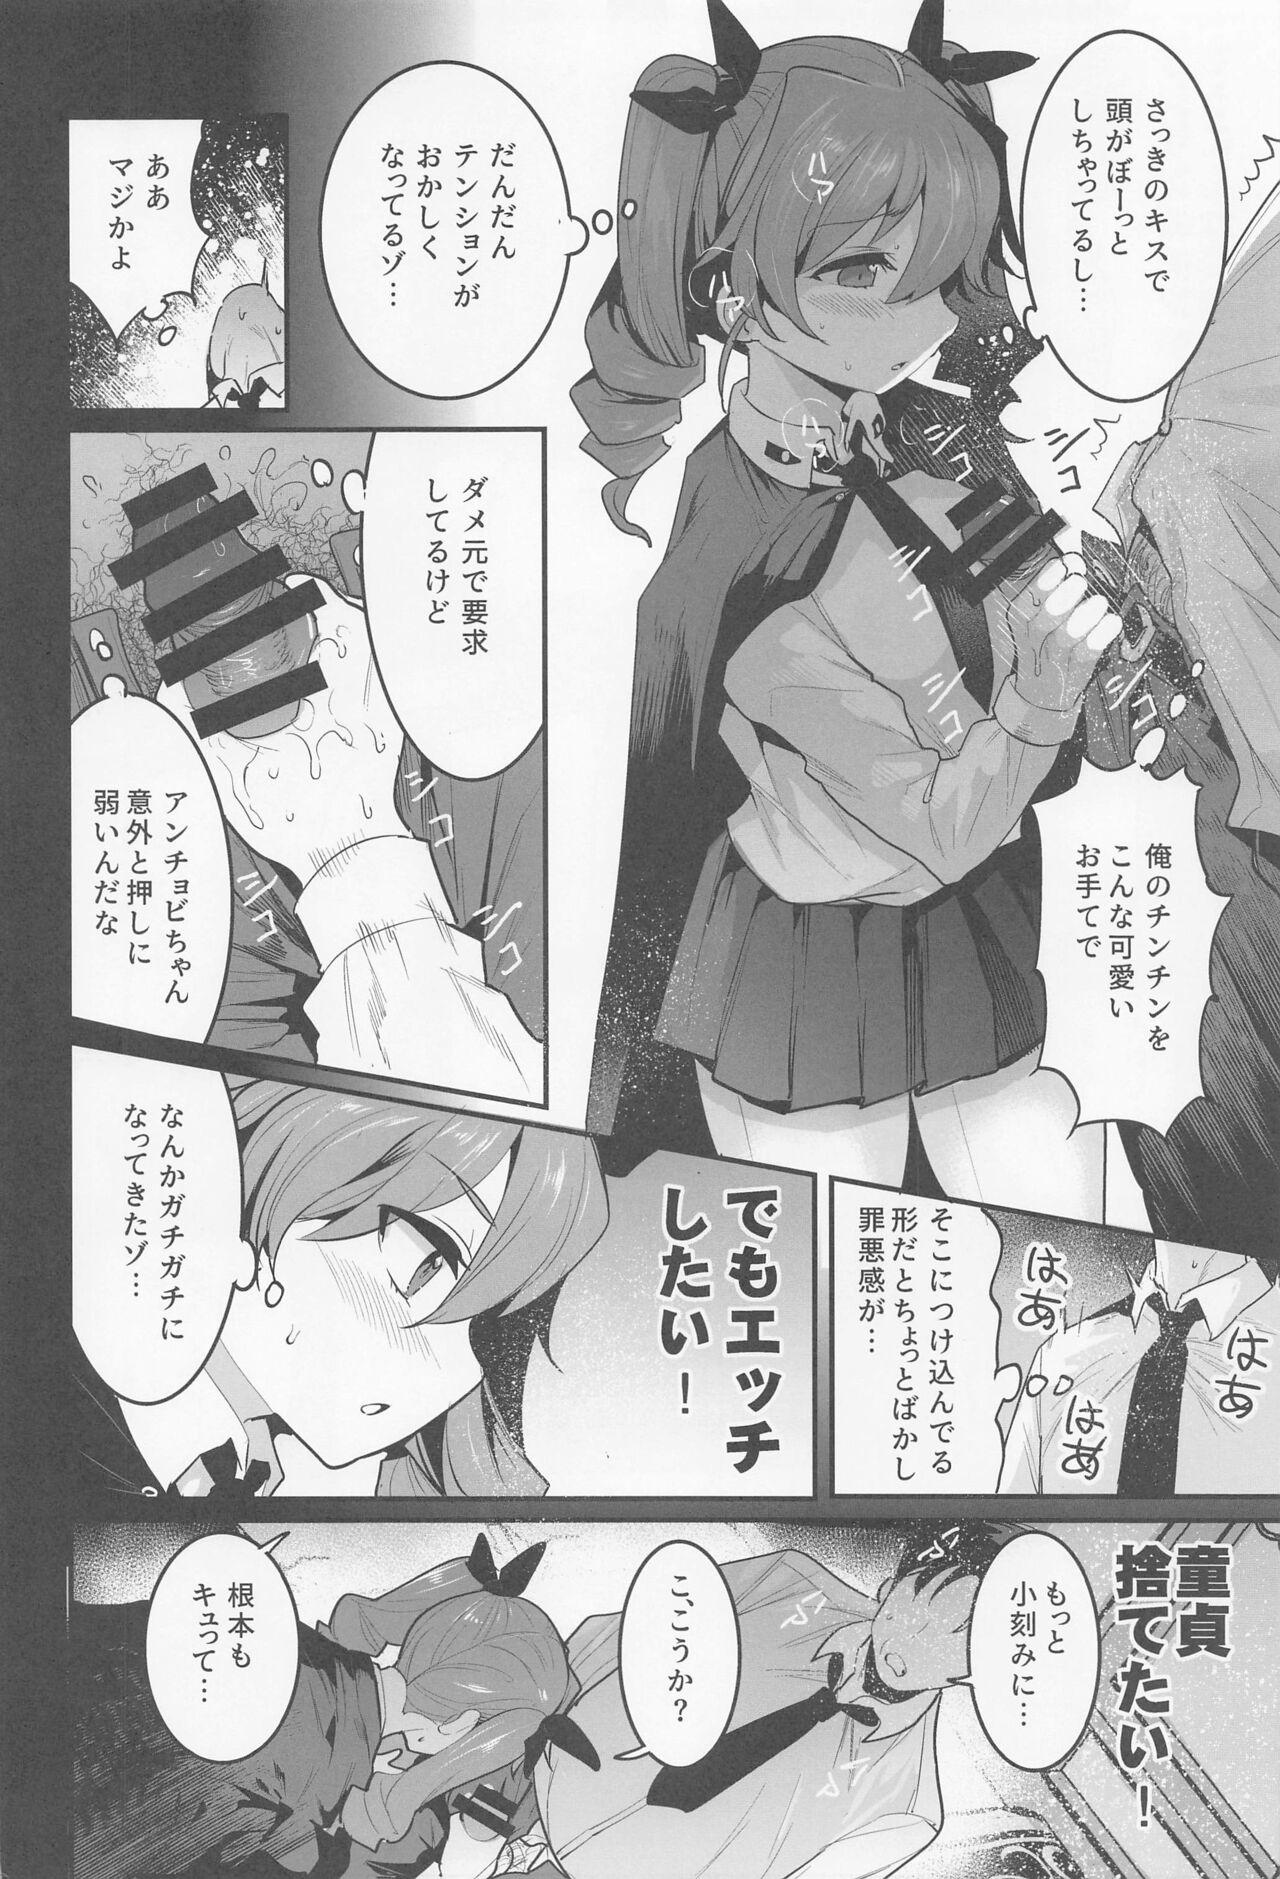 Letsdoeit anchobi dogezadeonegaishitaraippatsuyarasetekuremashita - Girls und panzer Nerd - Page 7